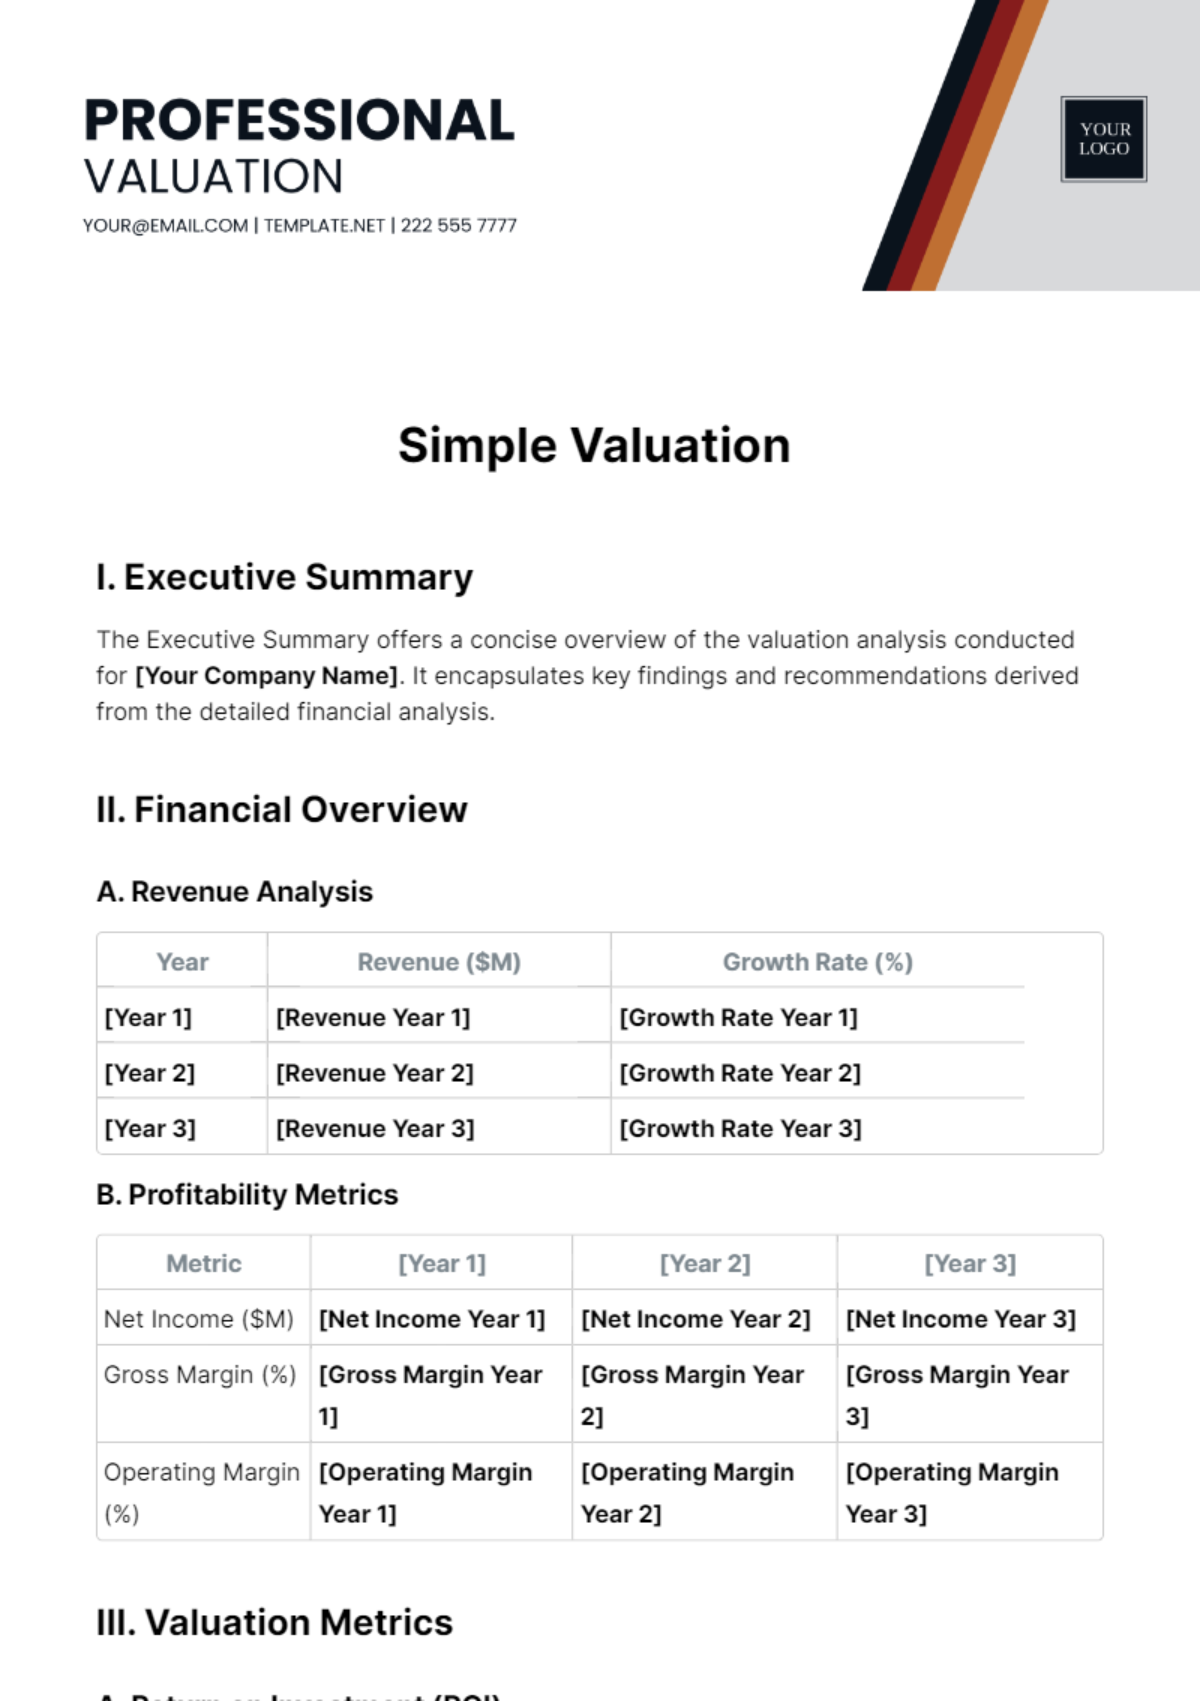 Simple Valuation Template